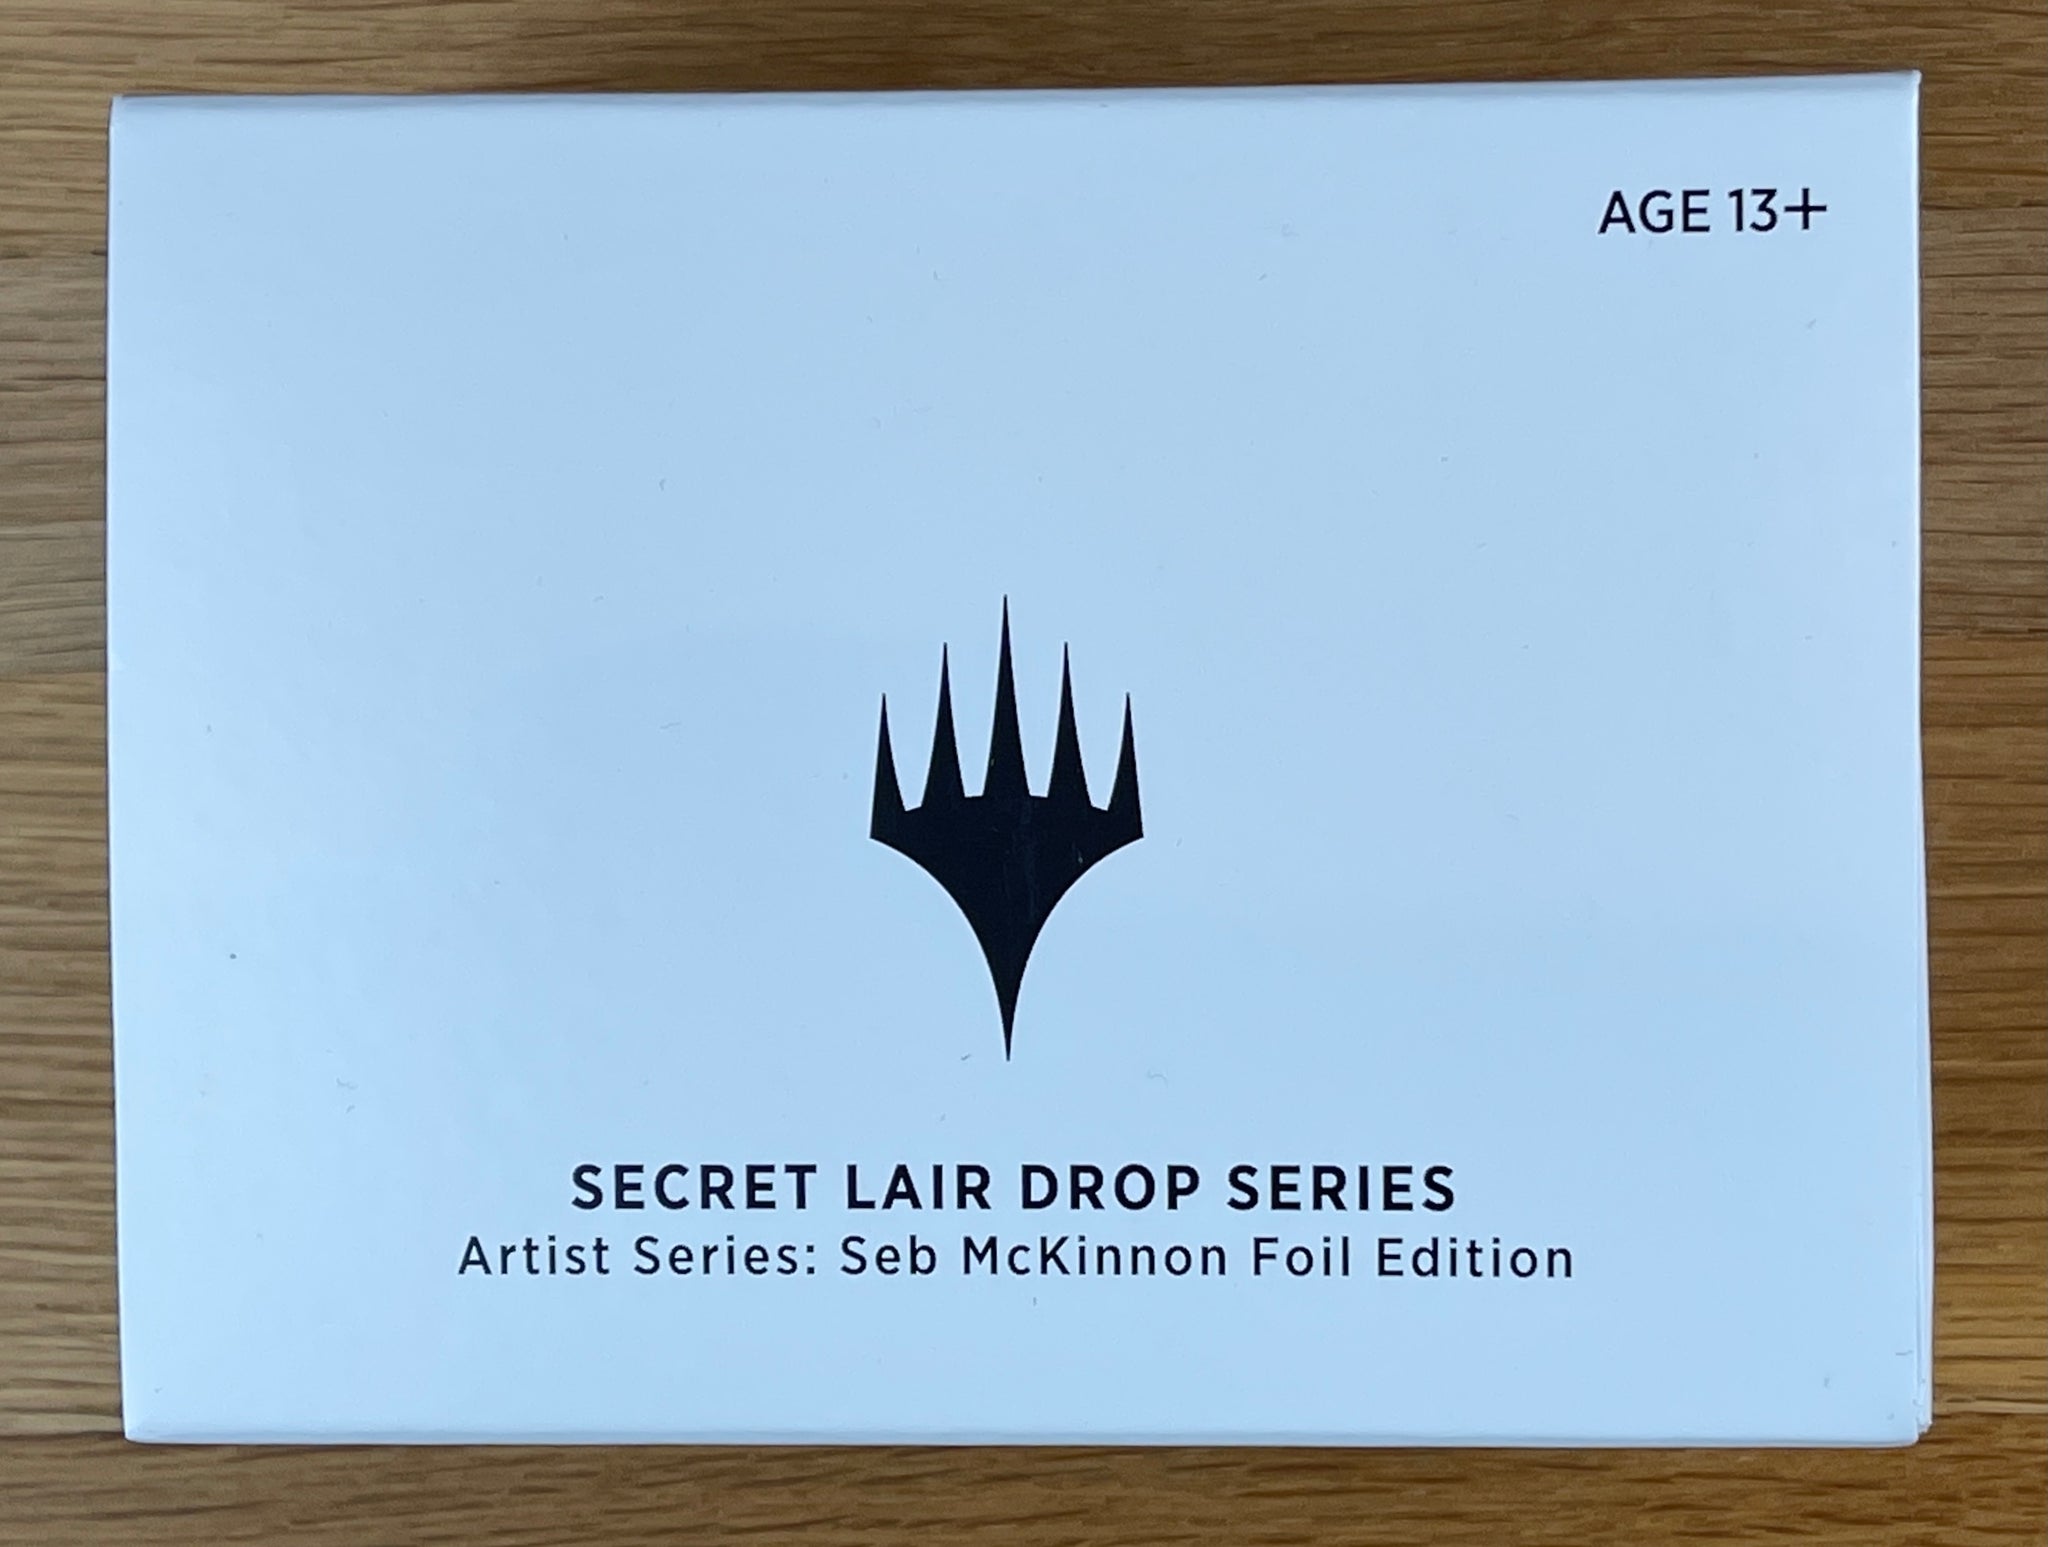 Secret Lair Edition - Artist Series: Seb McKinnon (Foil Edition)